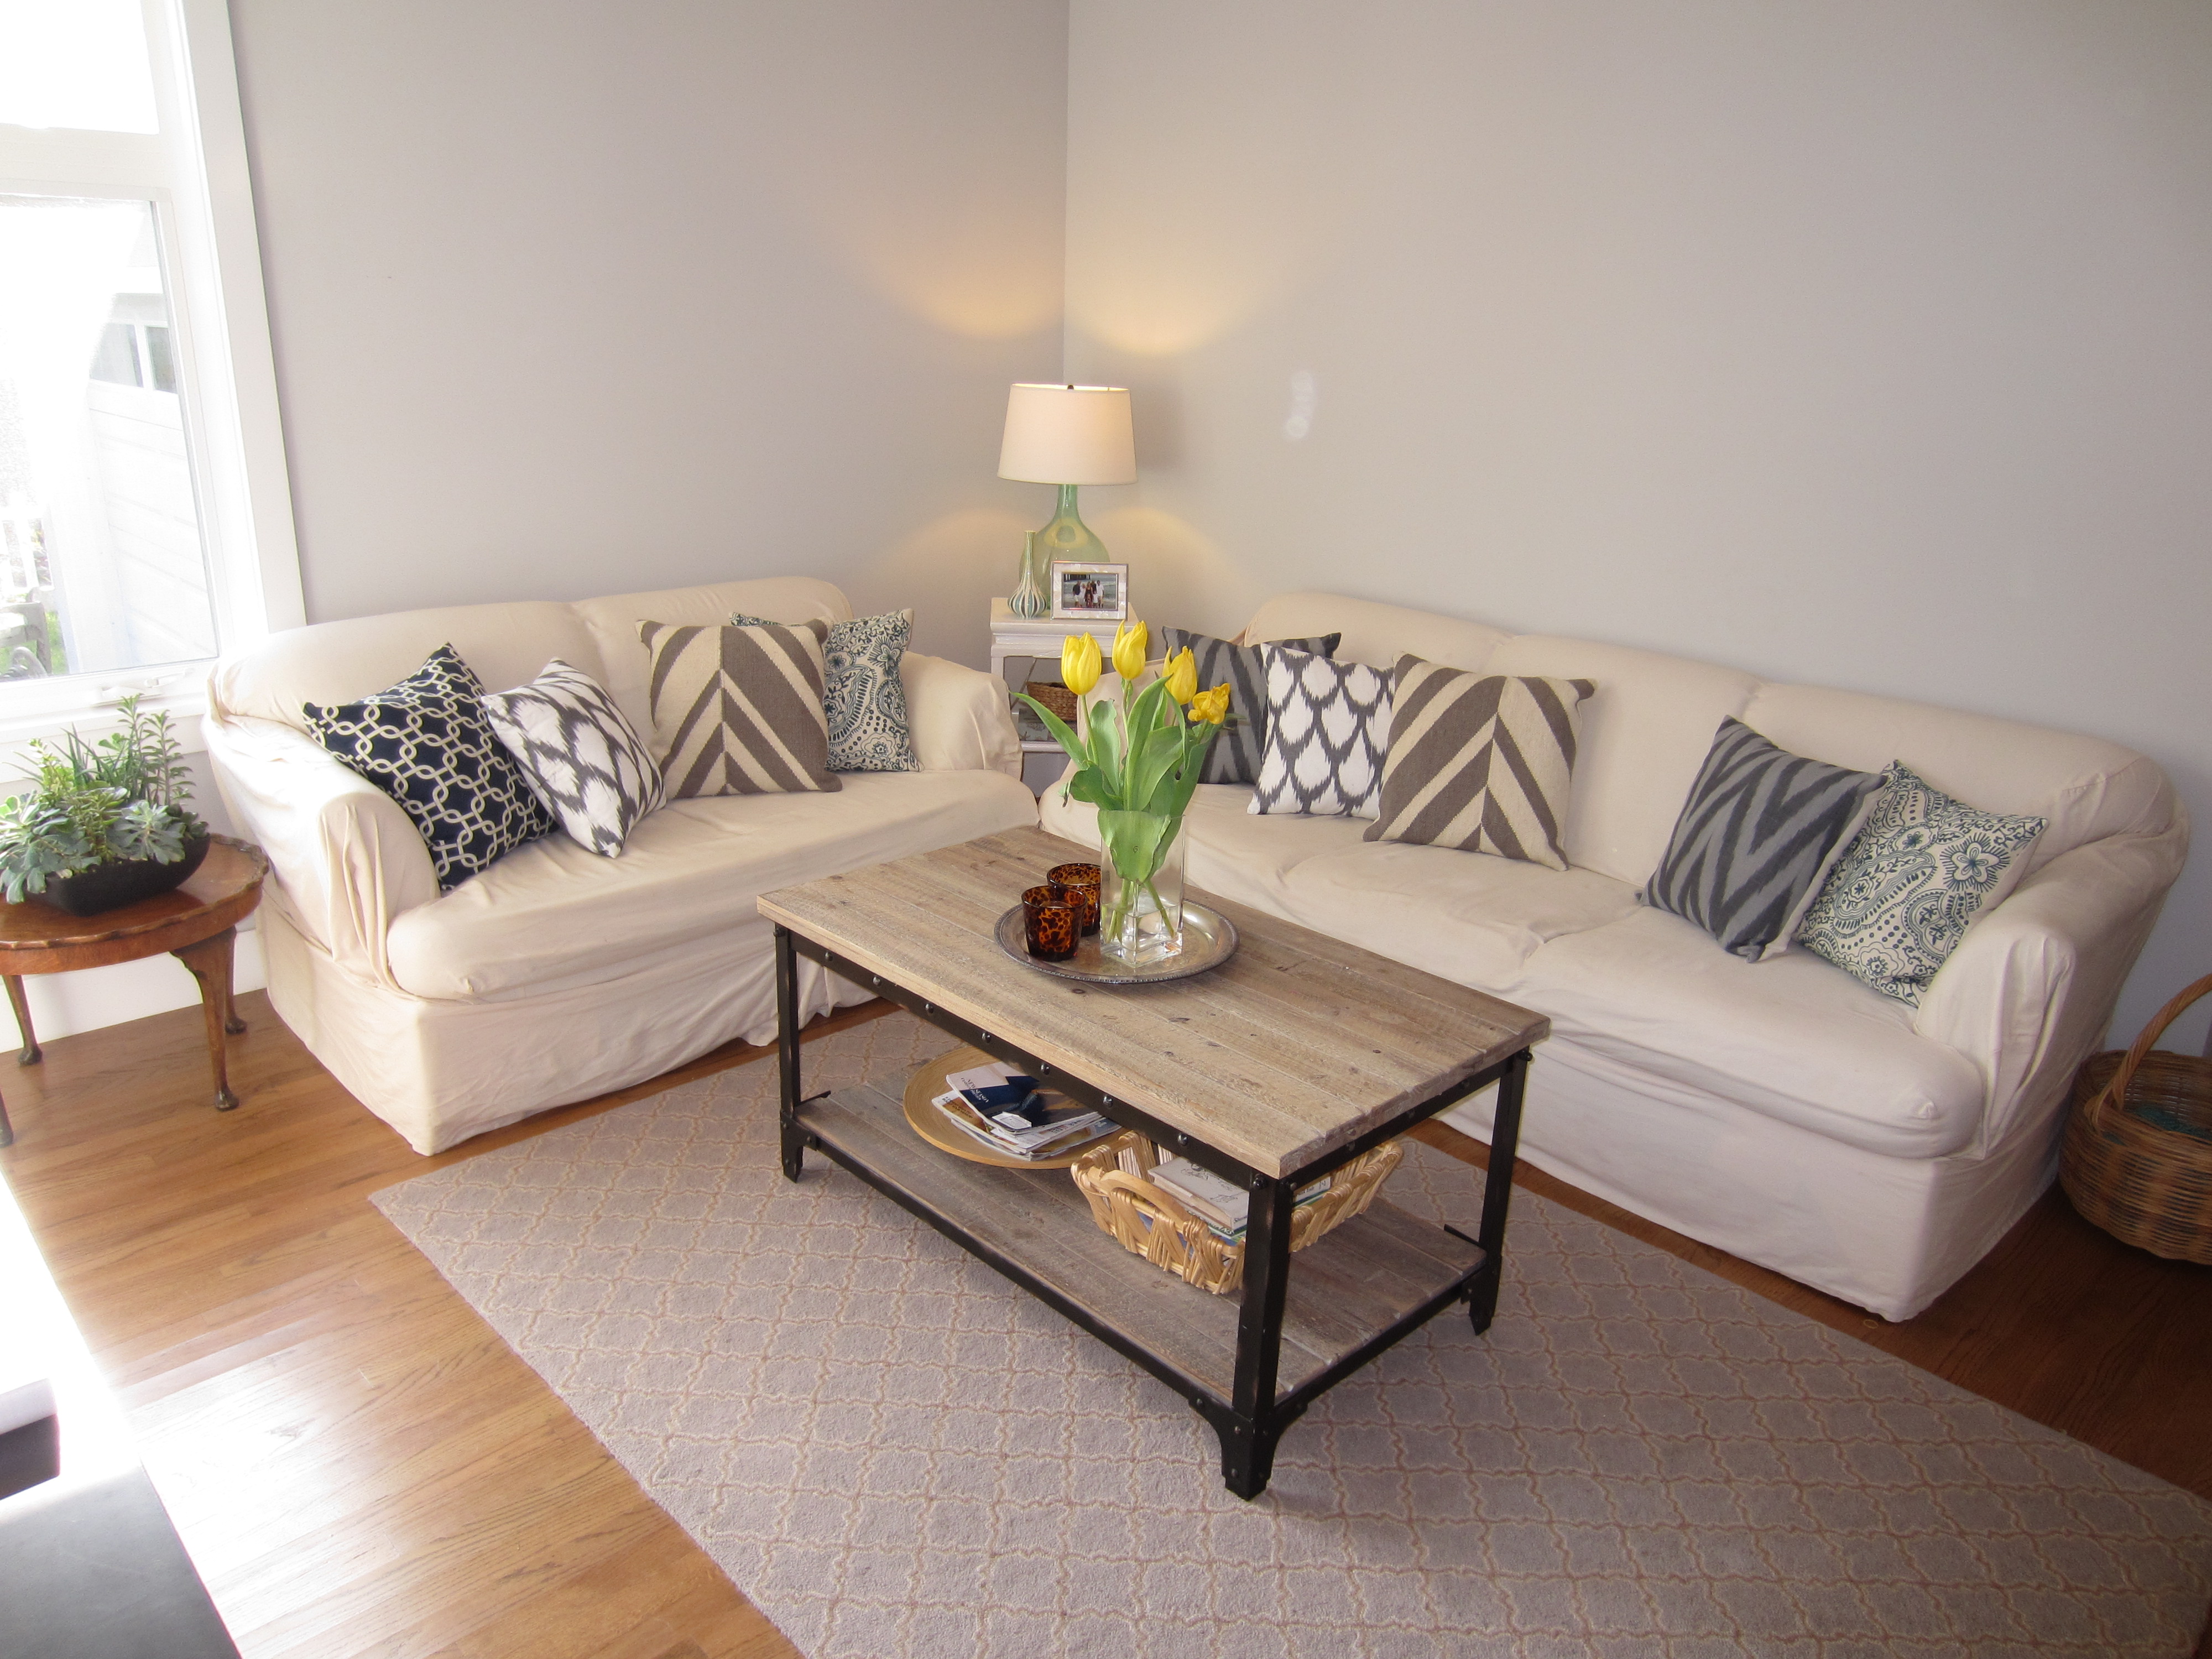 New Slipcover Furniture Living Room for Simple Design